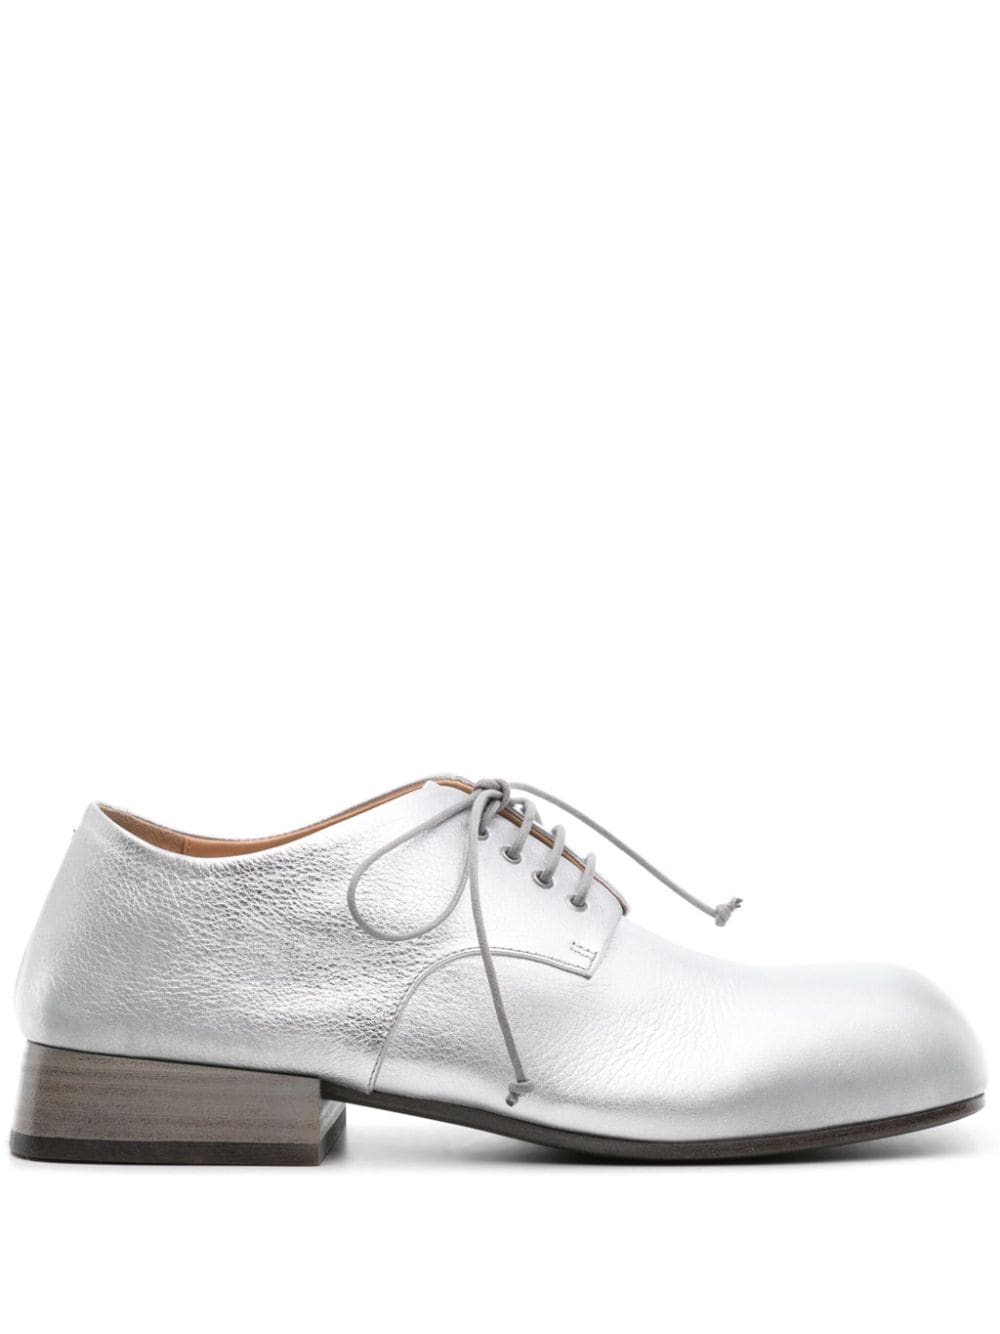 Marsèll Tellina leather Derby shoes - Silver von Marsèll